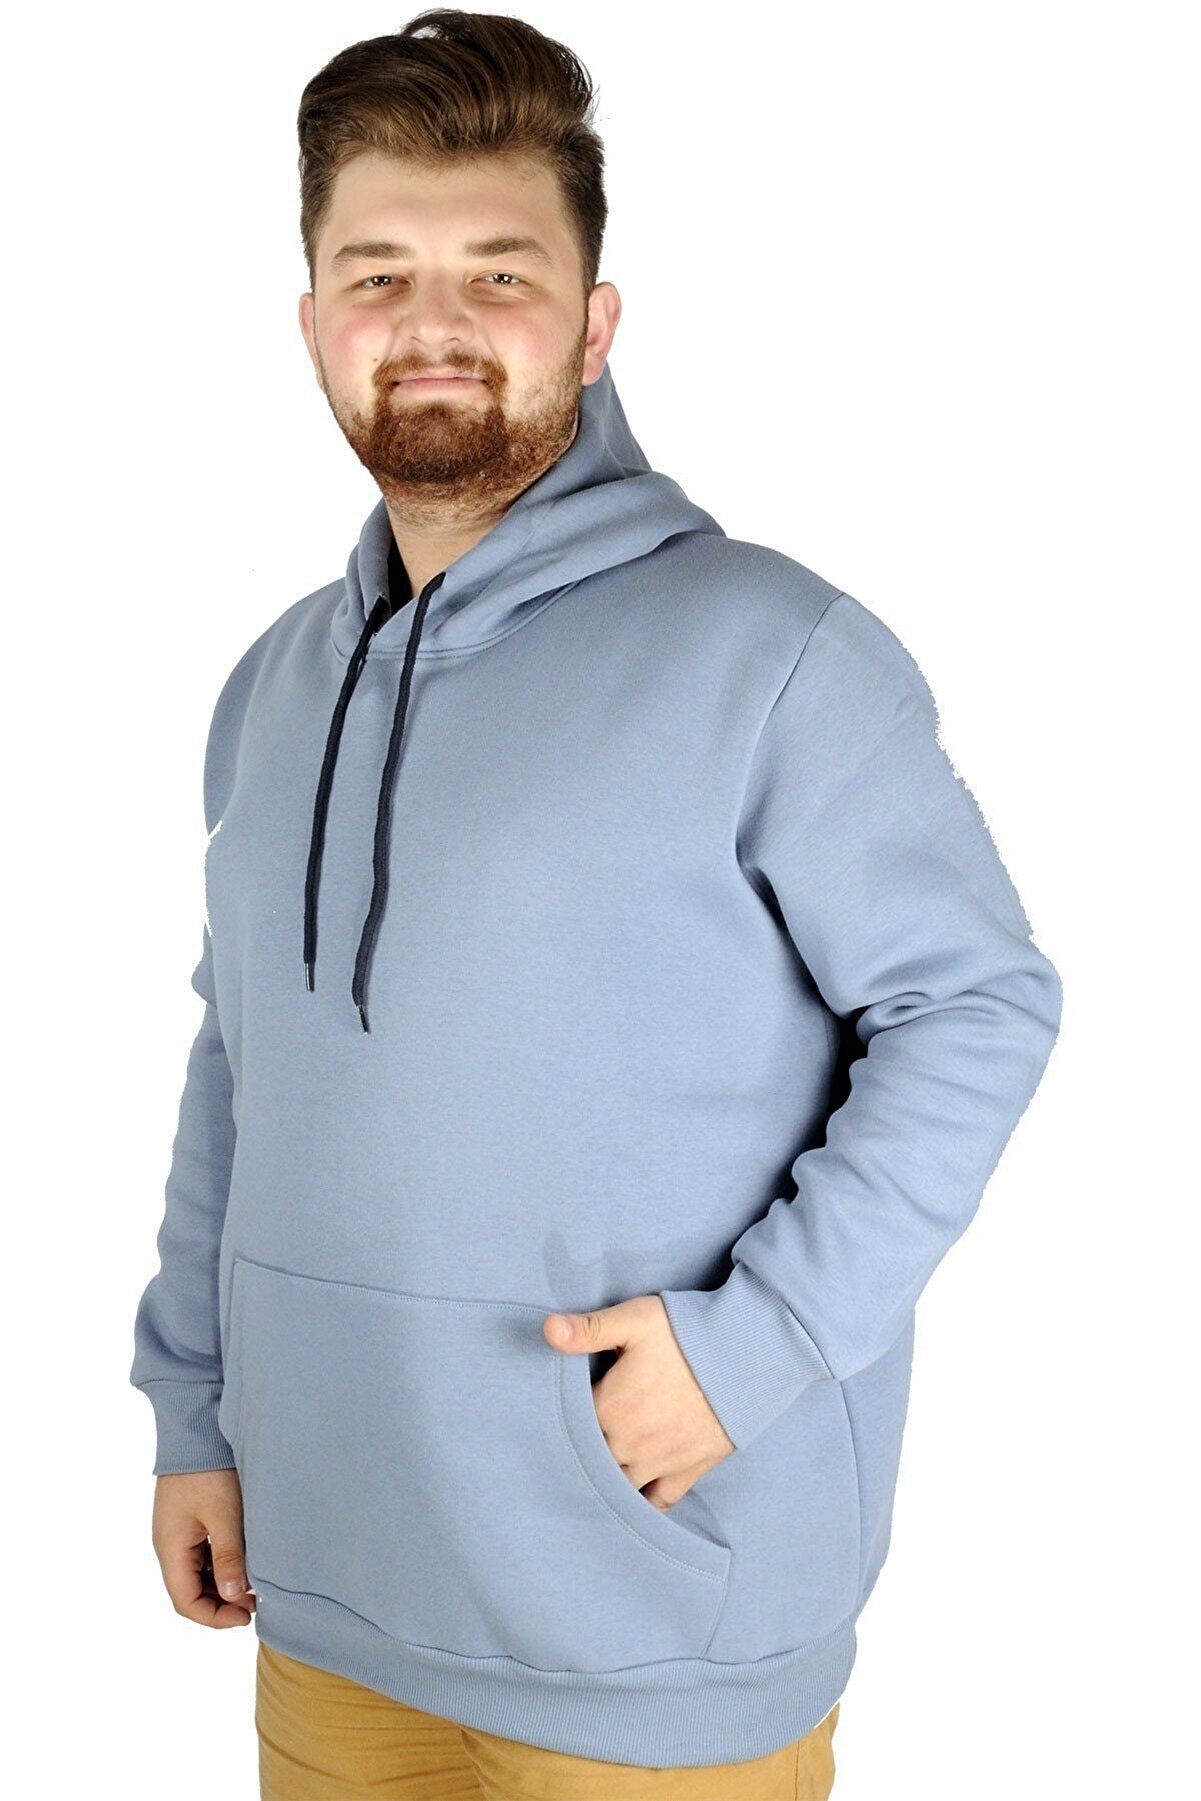 Modexl Erkek Sweatshirt Kapşonlu Pocket Basic 20562 Mavi